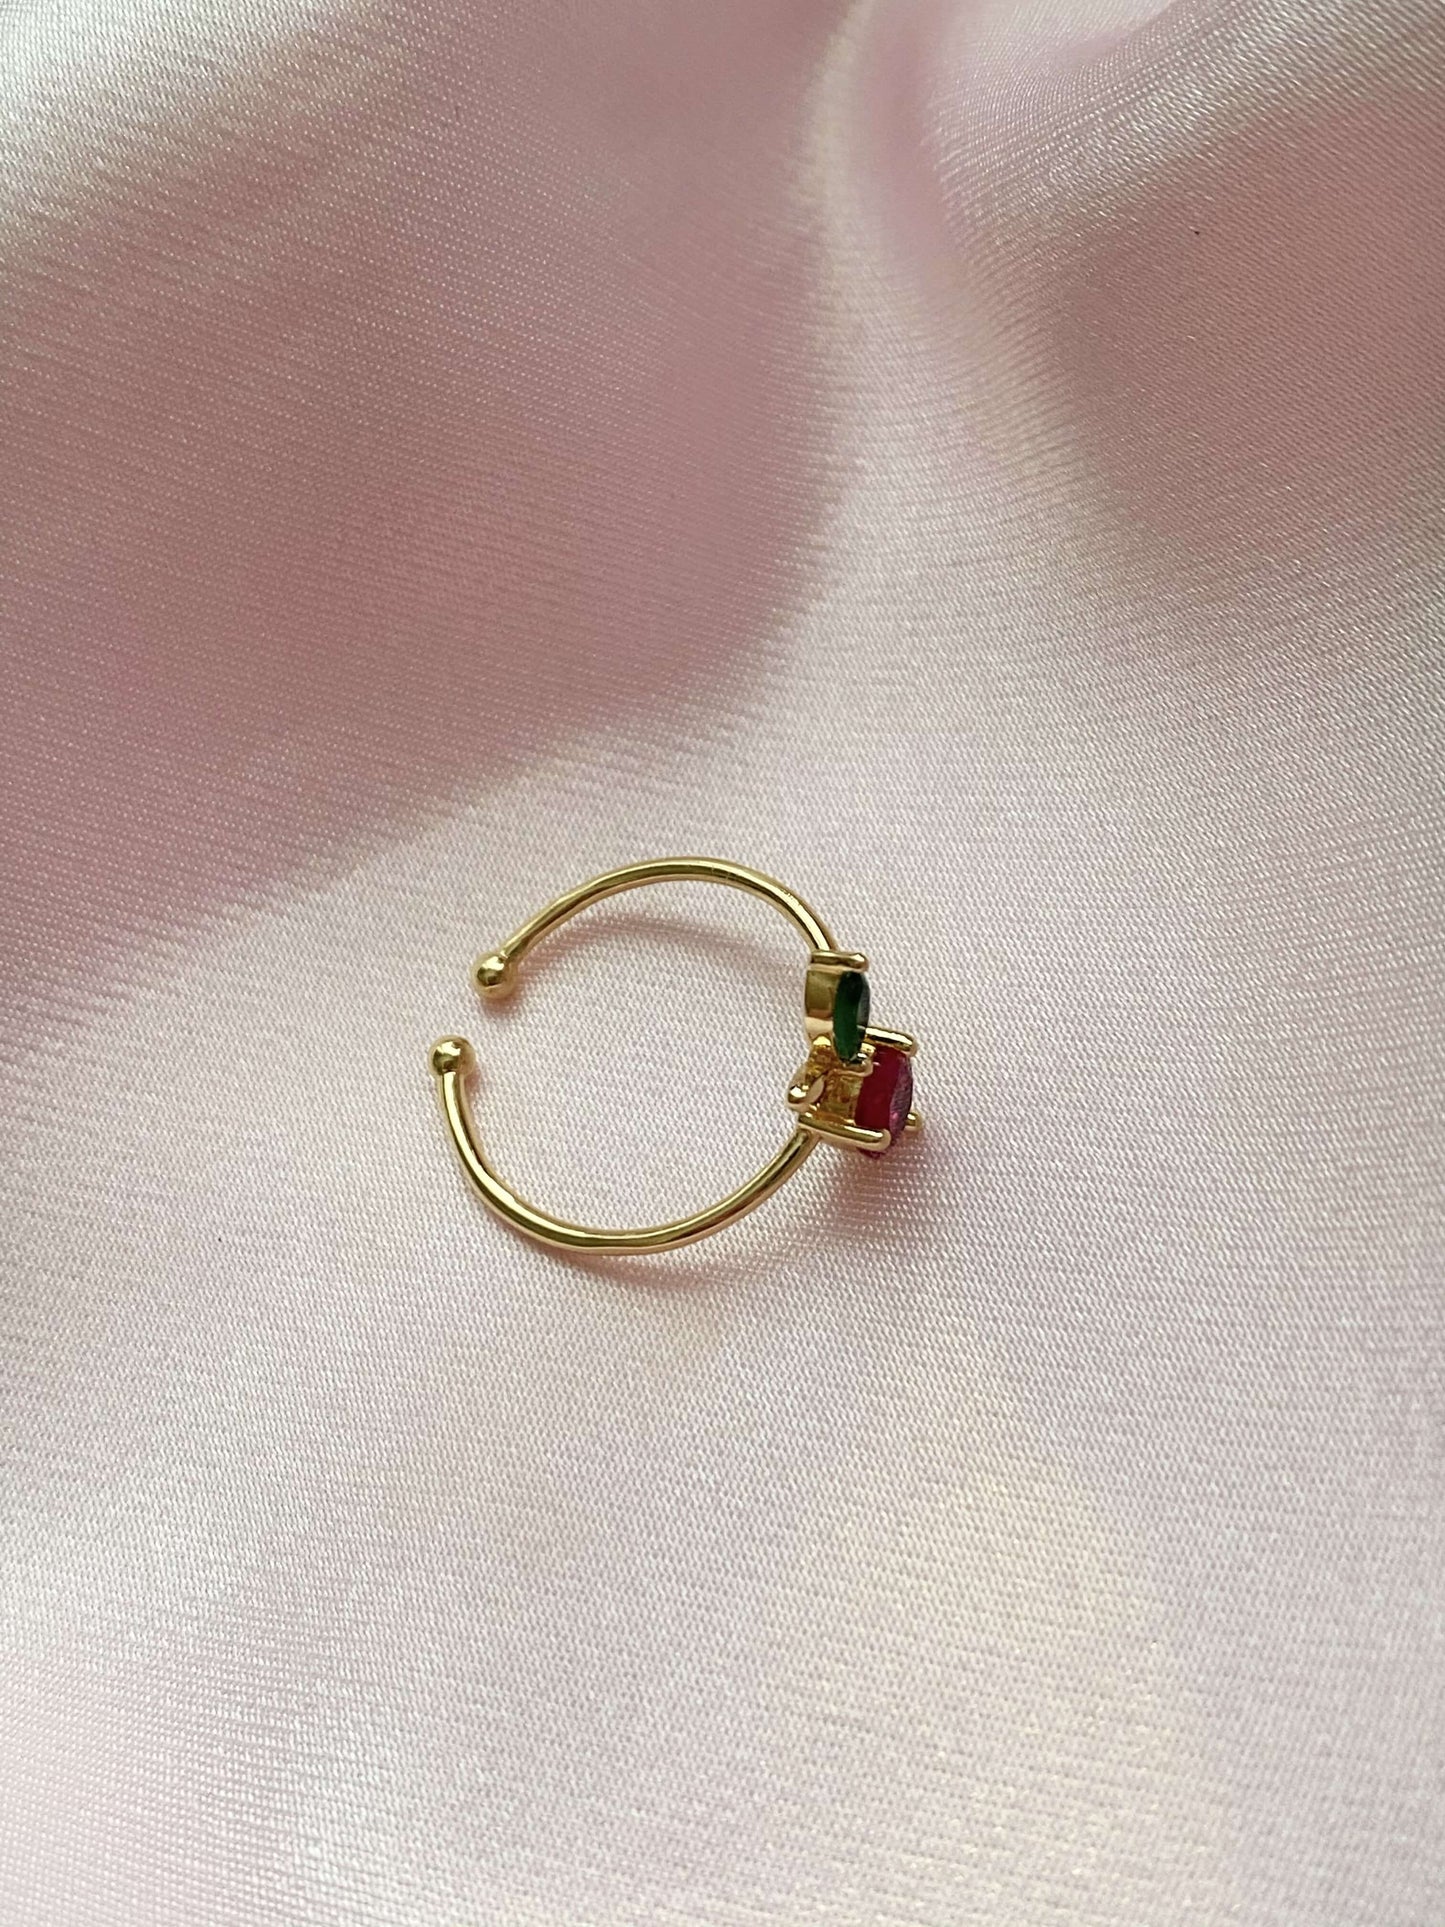 Wild Cherry Ring - Luna Alaska Jewelry